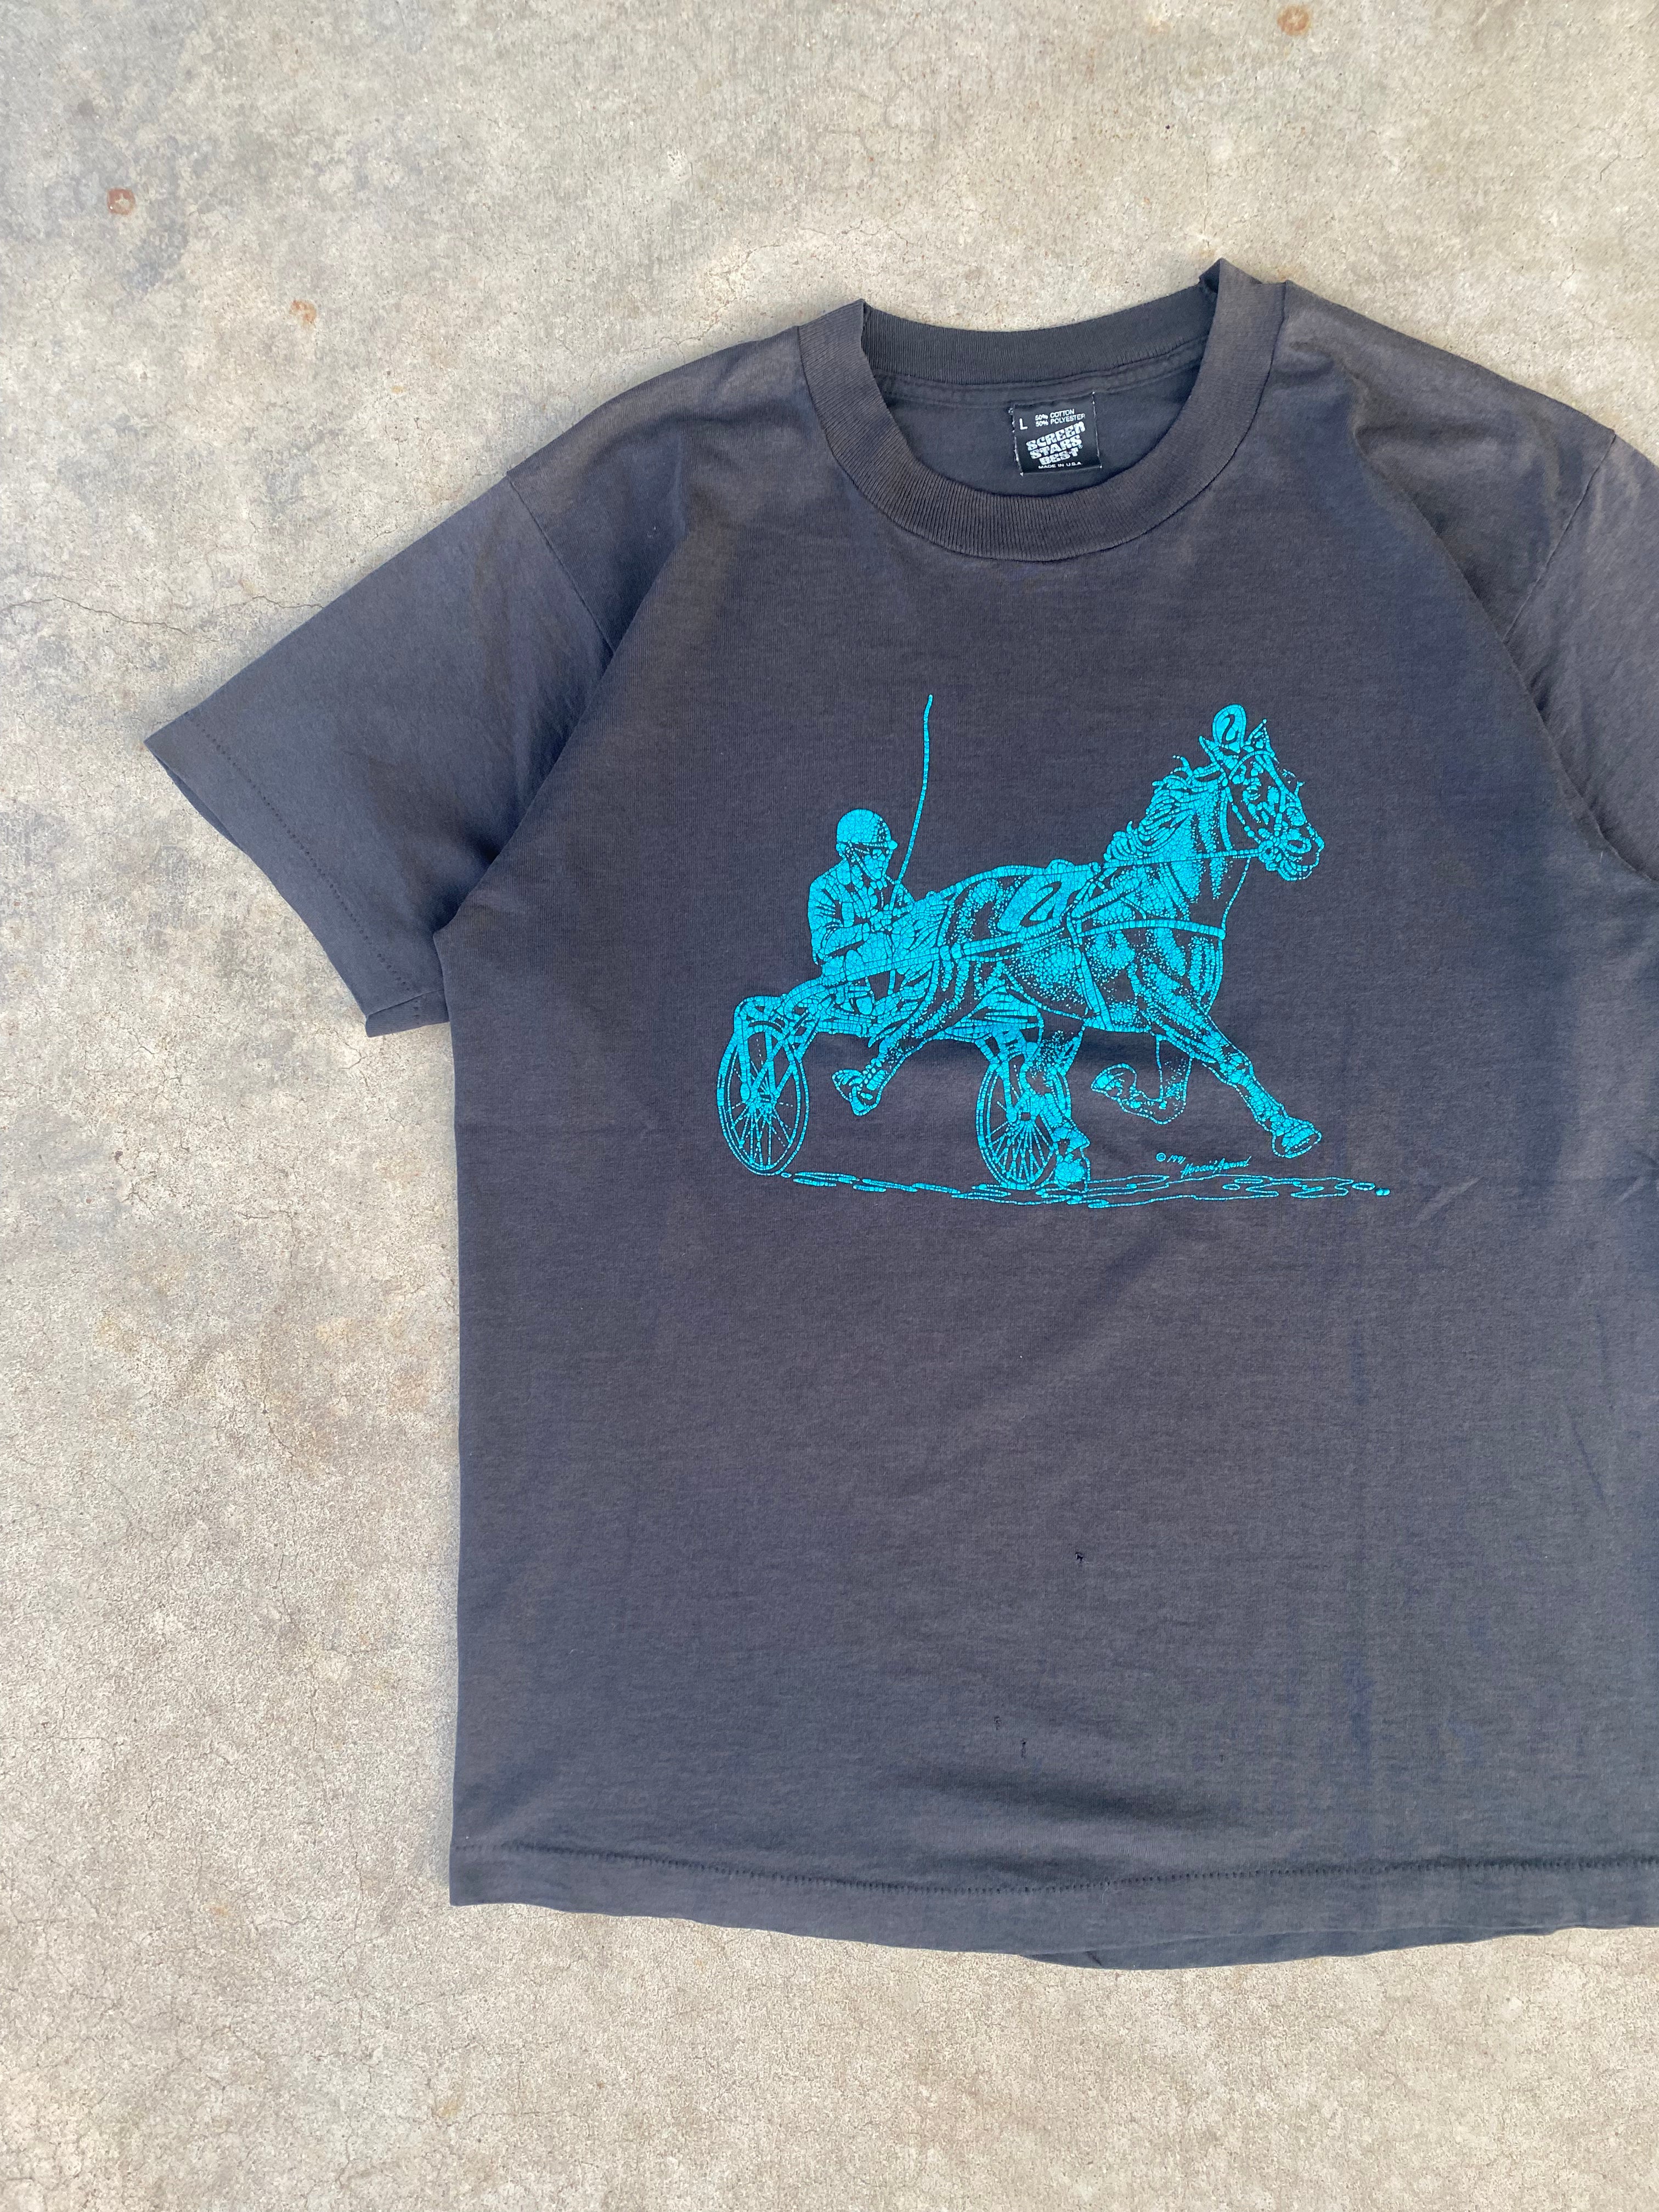 1991 Faded Horse and Jockey T-Shirt (M)